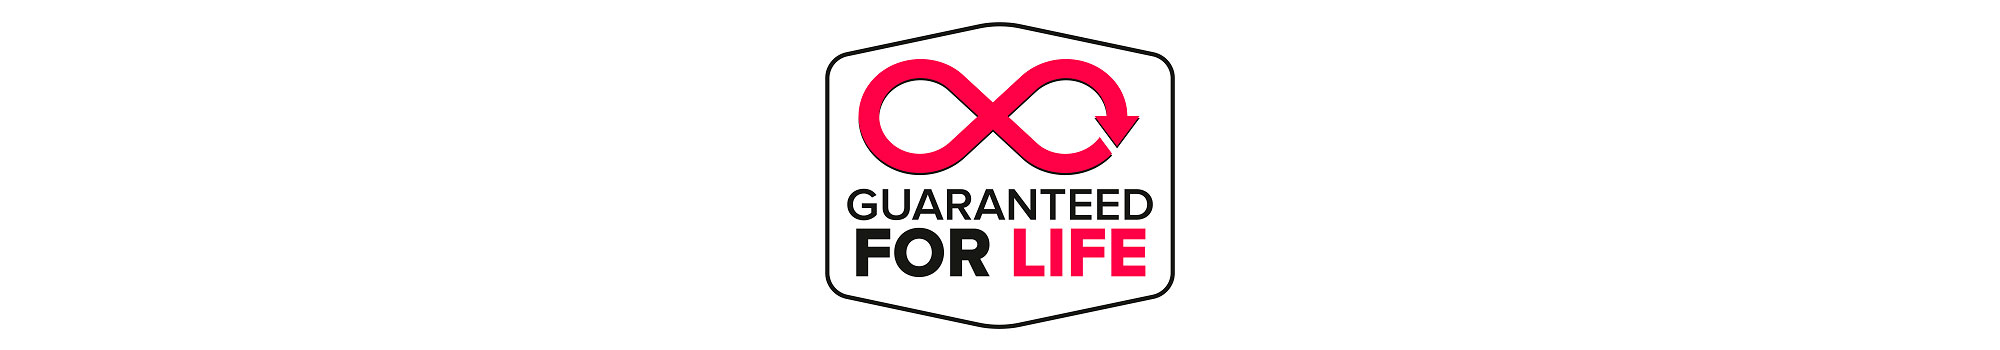 logo_guaranteed_for_life_widescreen.jpg